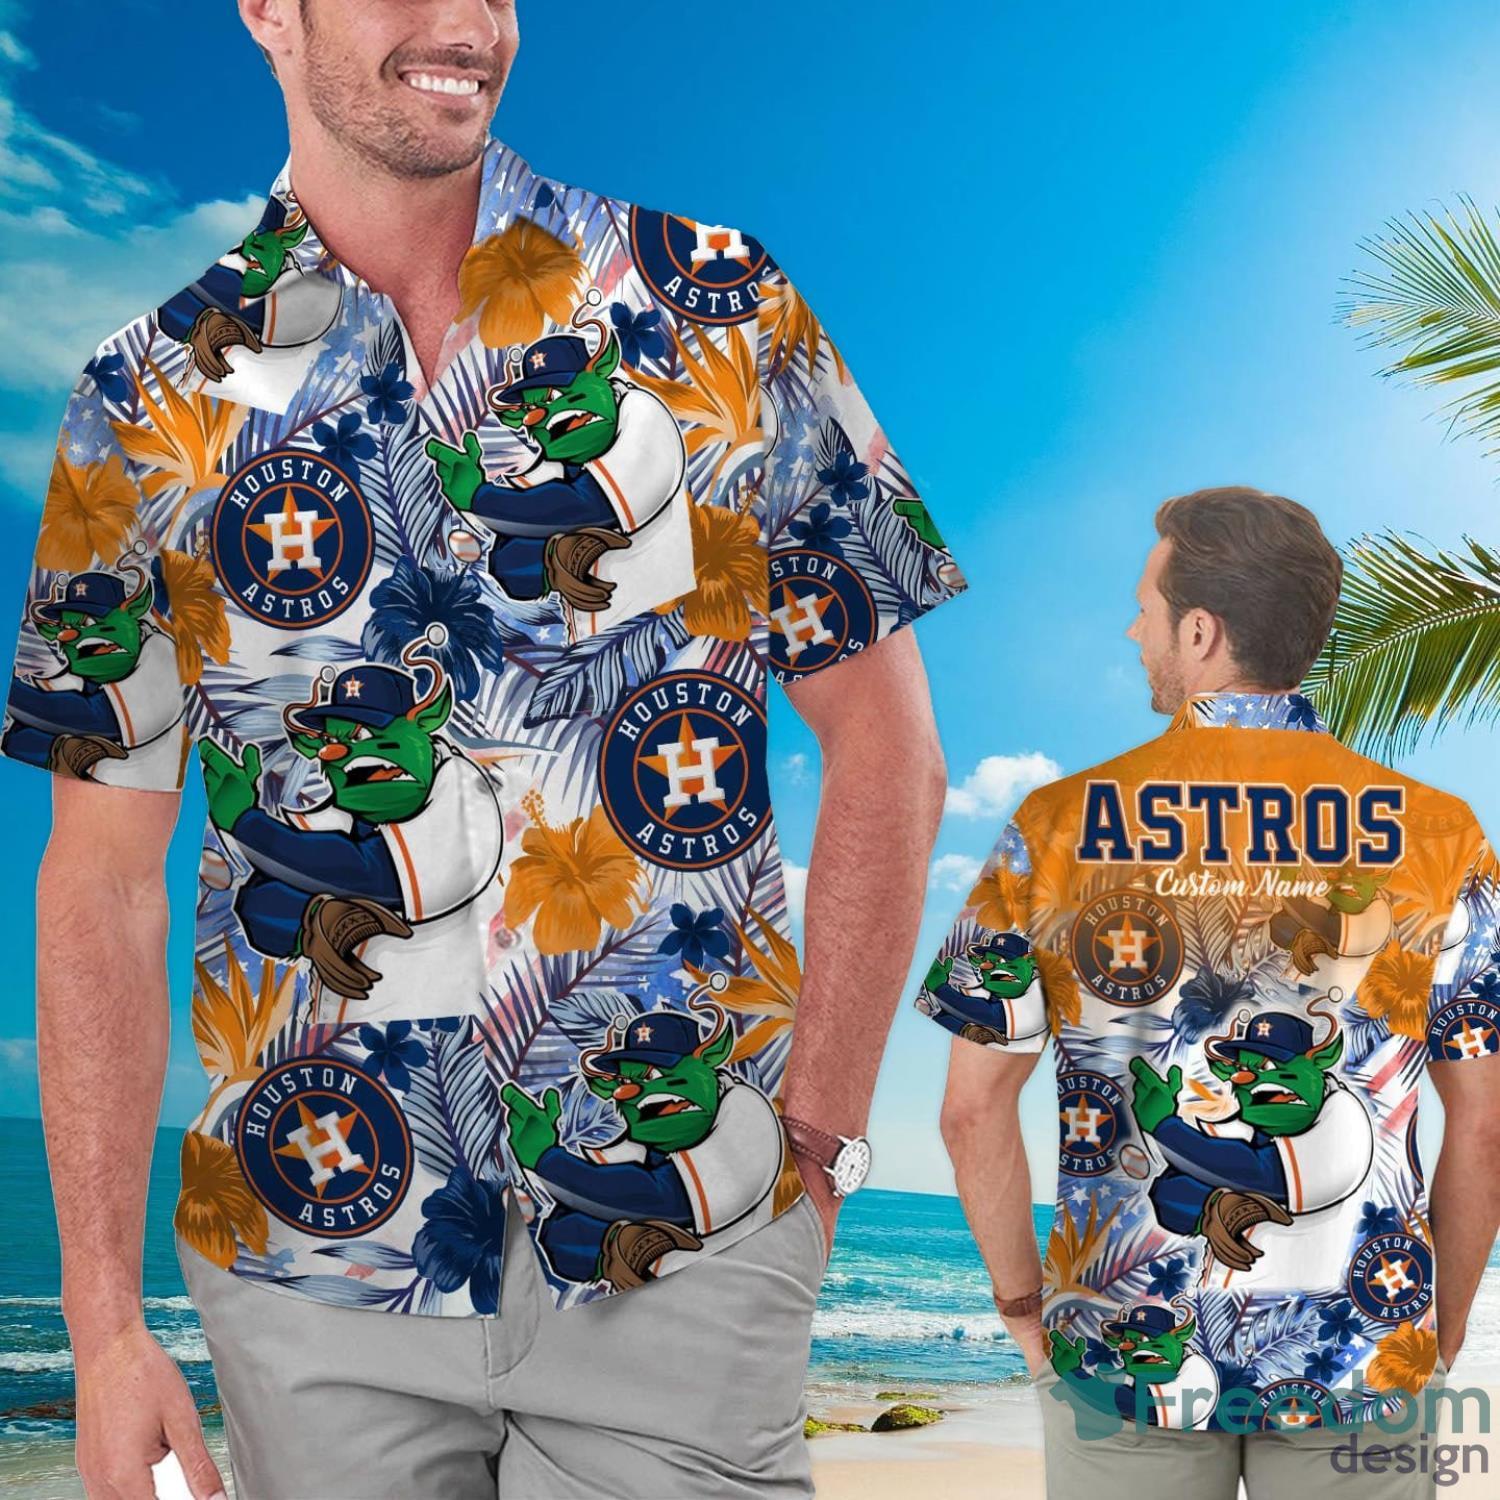 Tropical Fruit Flower New York Yankees Hawaiian Shirt MLB Gifts - Limotees